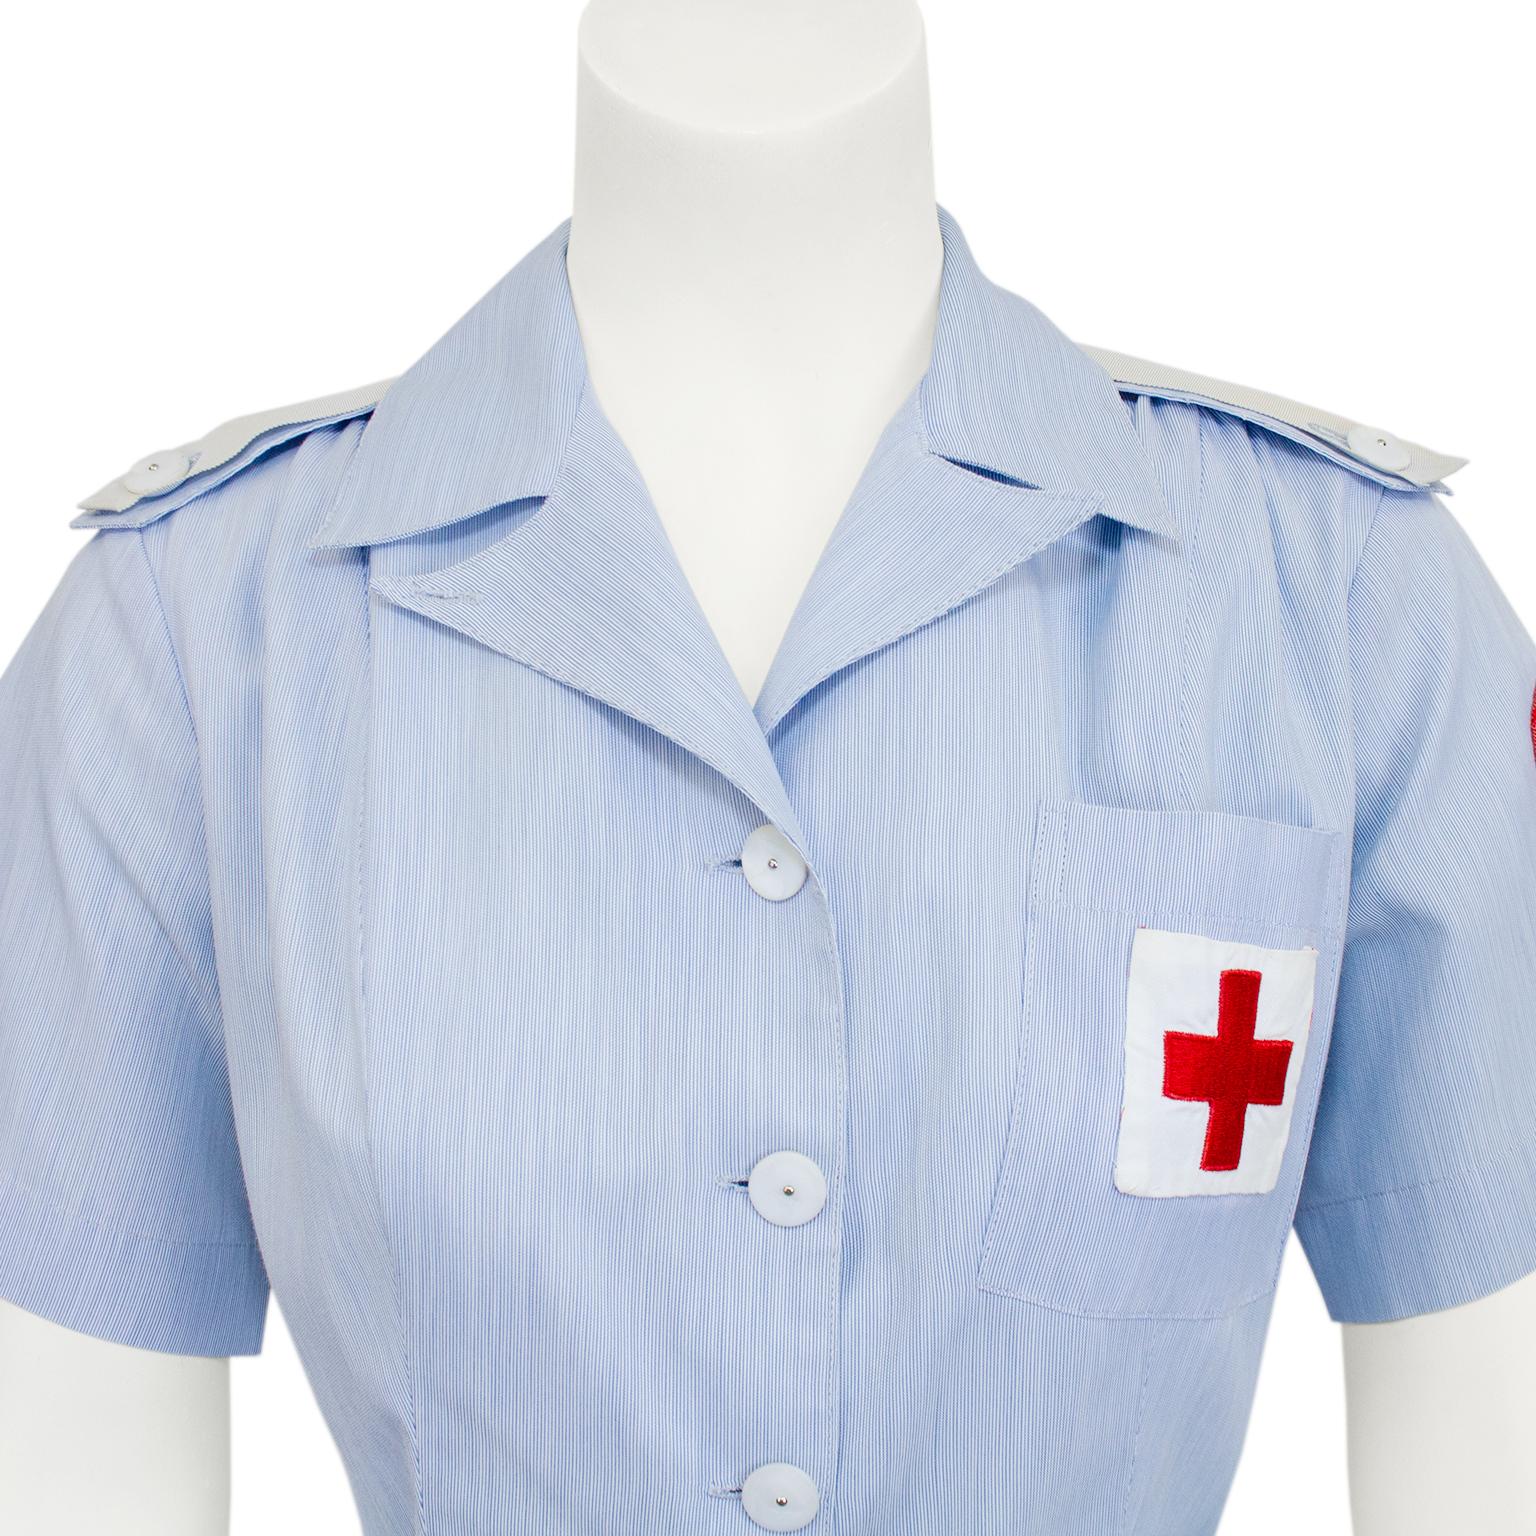 1950s nurse uniform